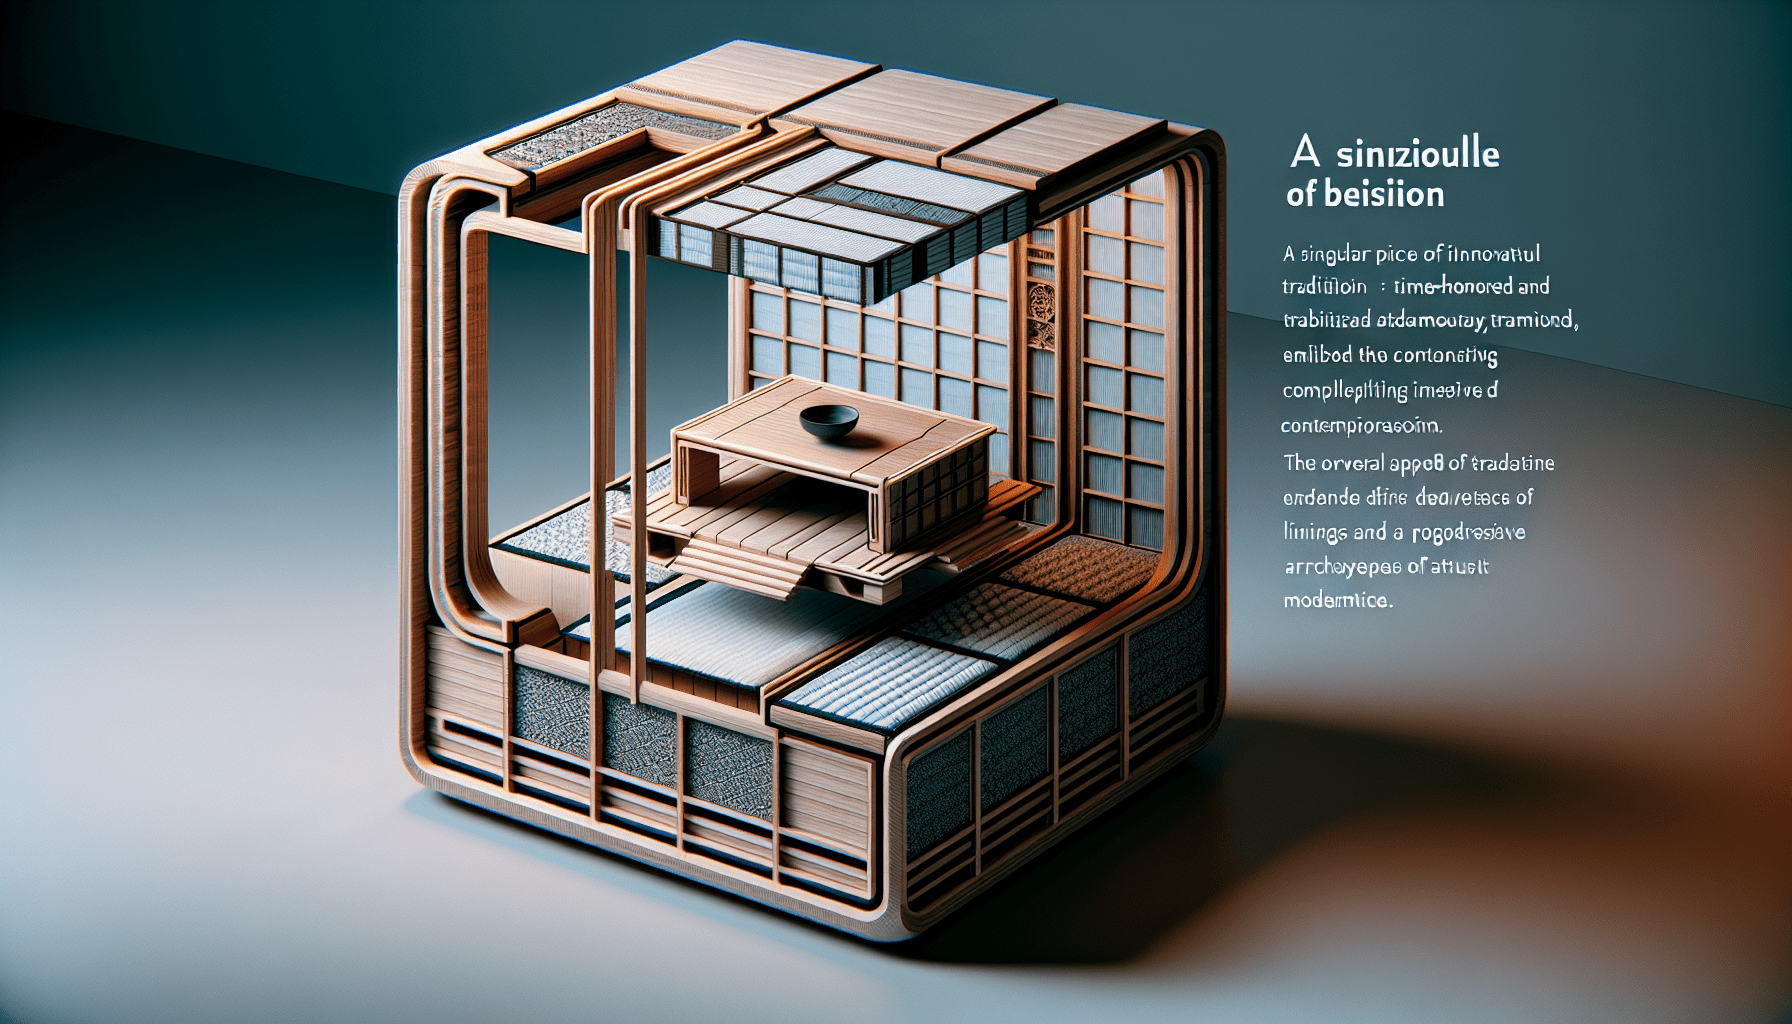 honokas-3d-printed-furniture-blends-traditional-tatami-with-modern-design-3 Honoka's 3D-Printed Furniture Blends Traditional Tatami with Modern Design